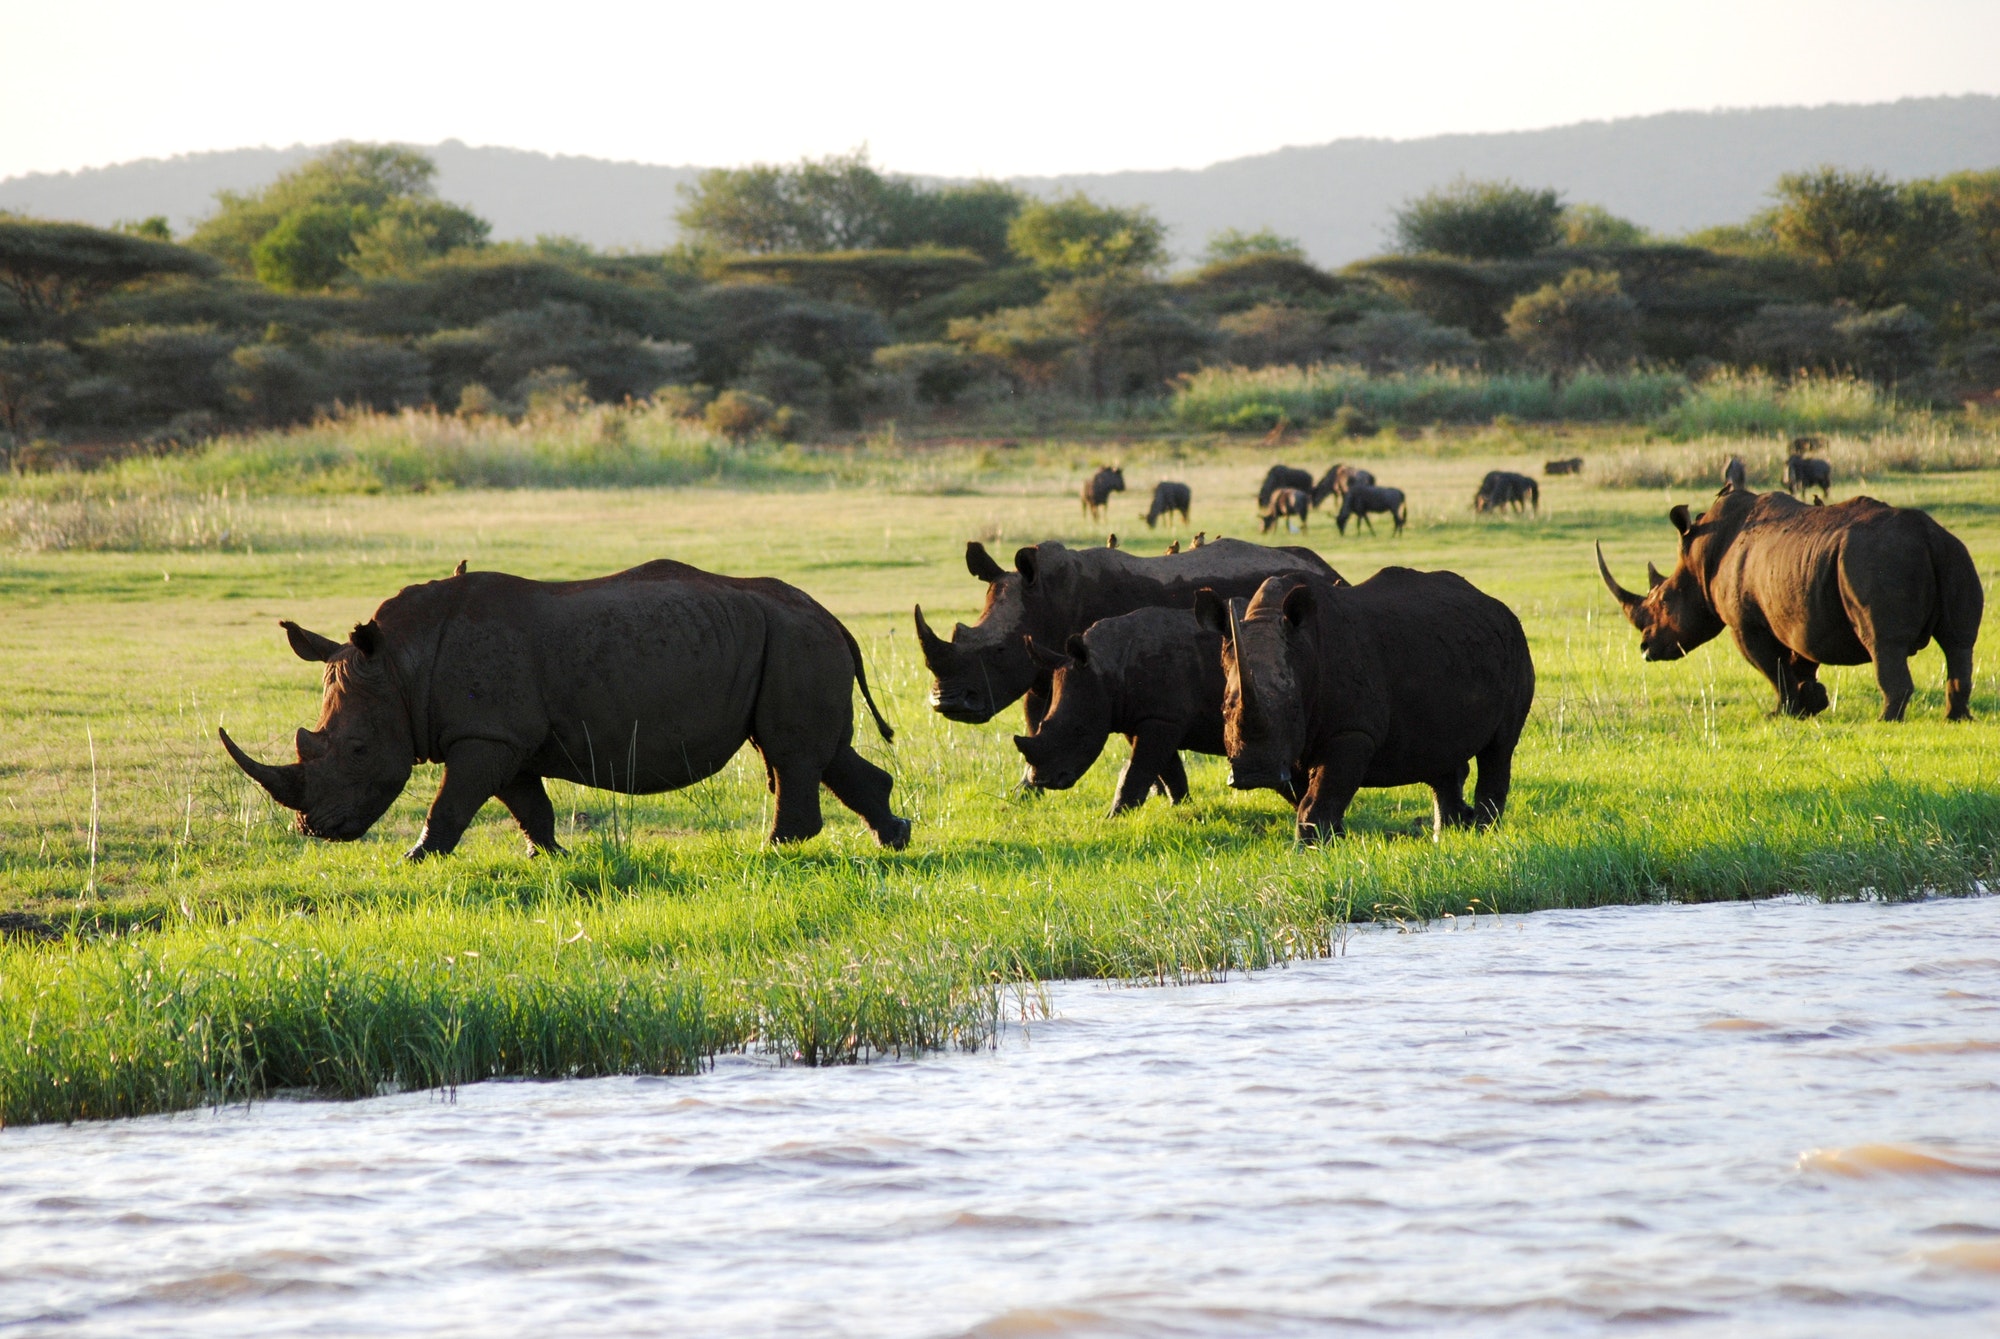 Rhinos at Jozini dam in South Africa